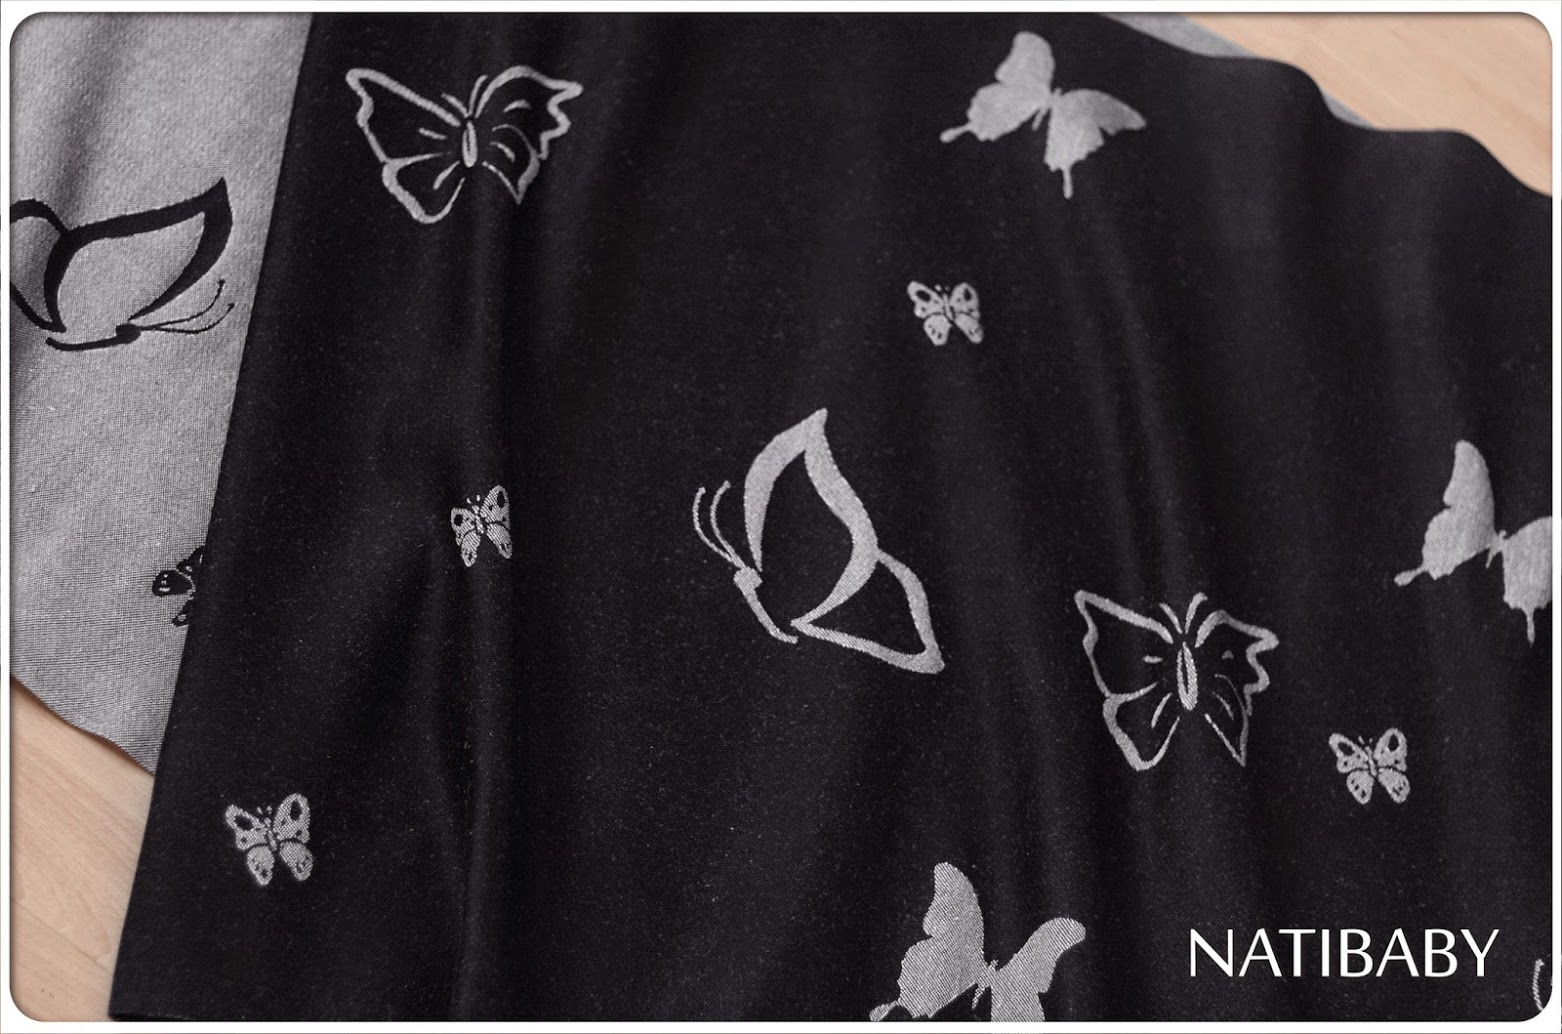 Natibaby Butterfly (конопля) Image